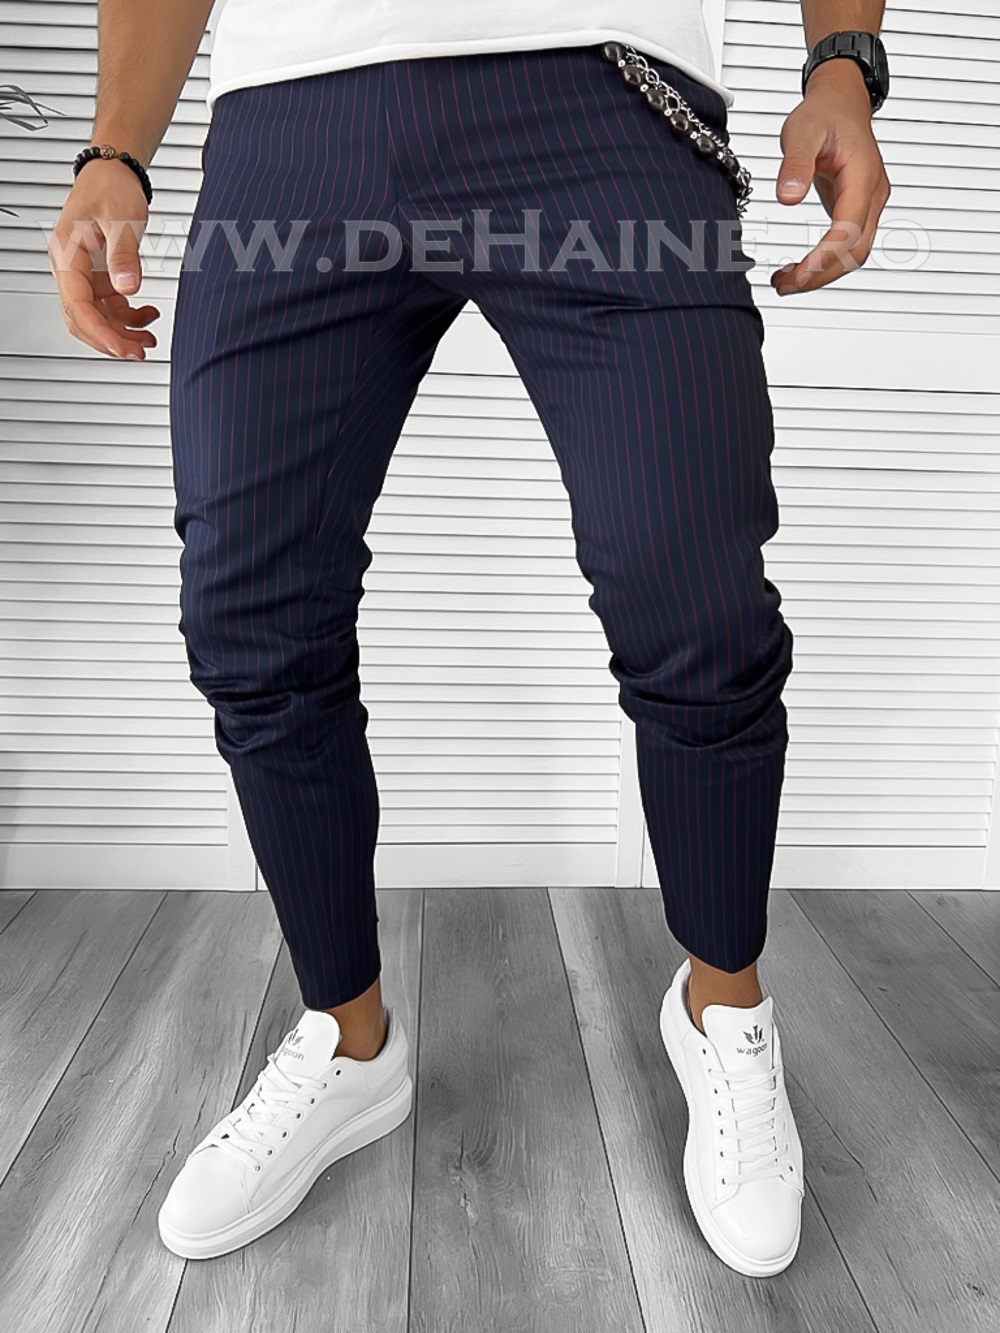 Pantaloni barbati casual regular fit bleumarin in dungi B7886 14-4 E~